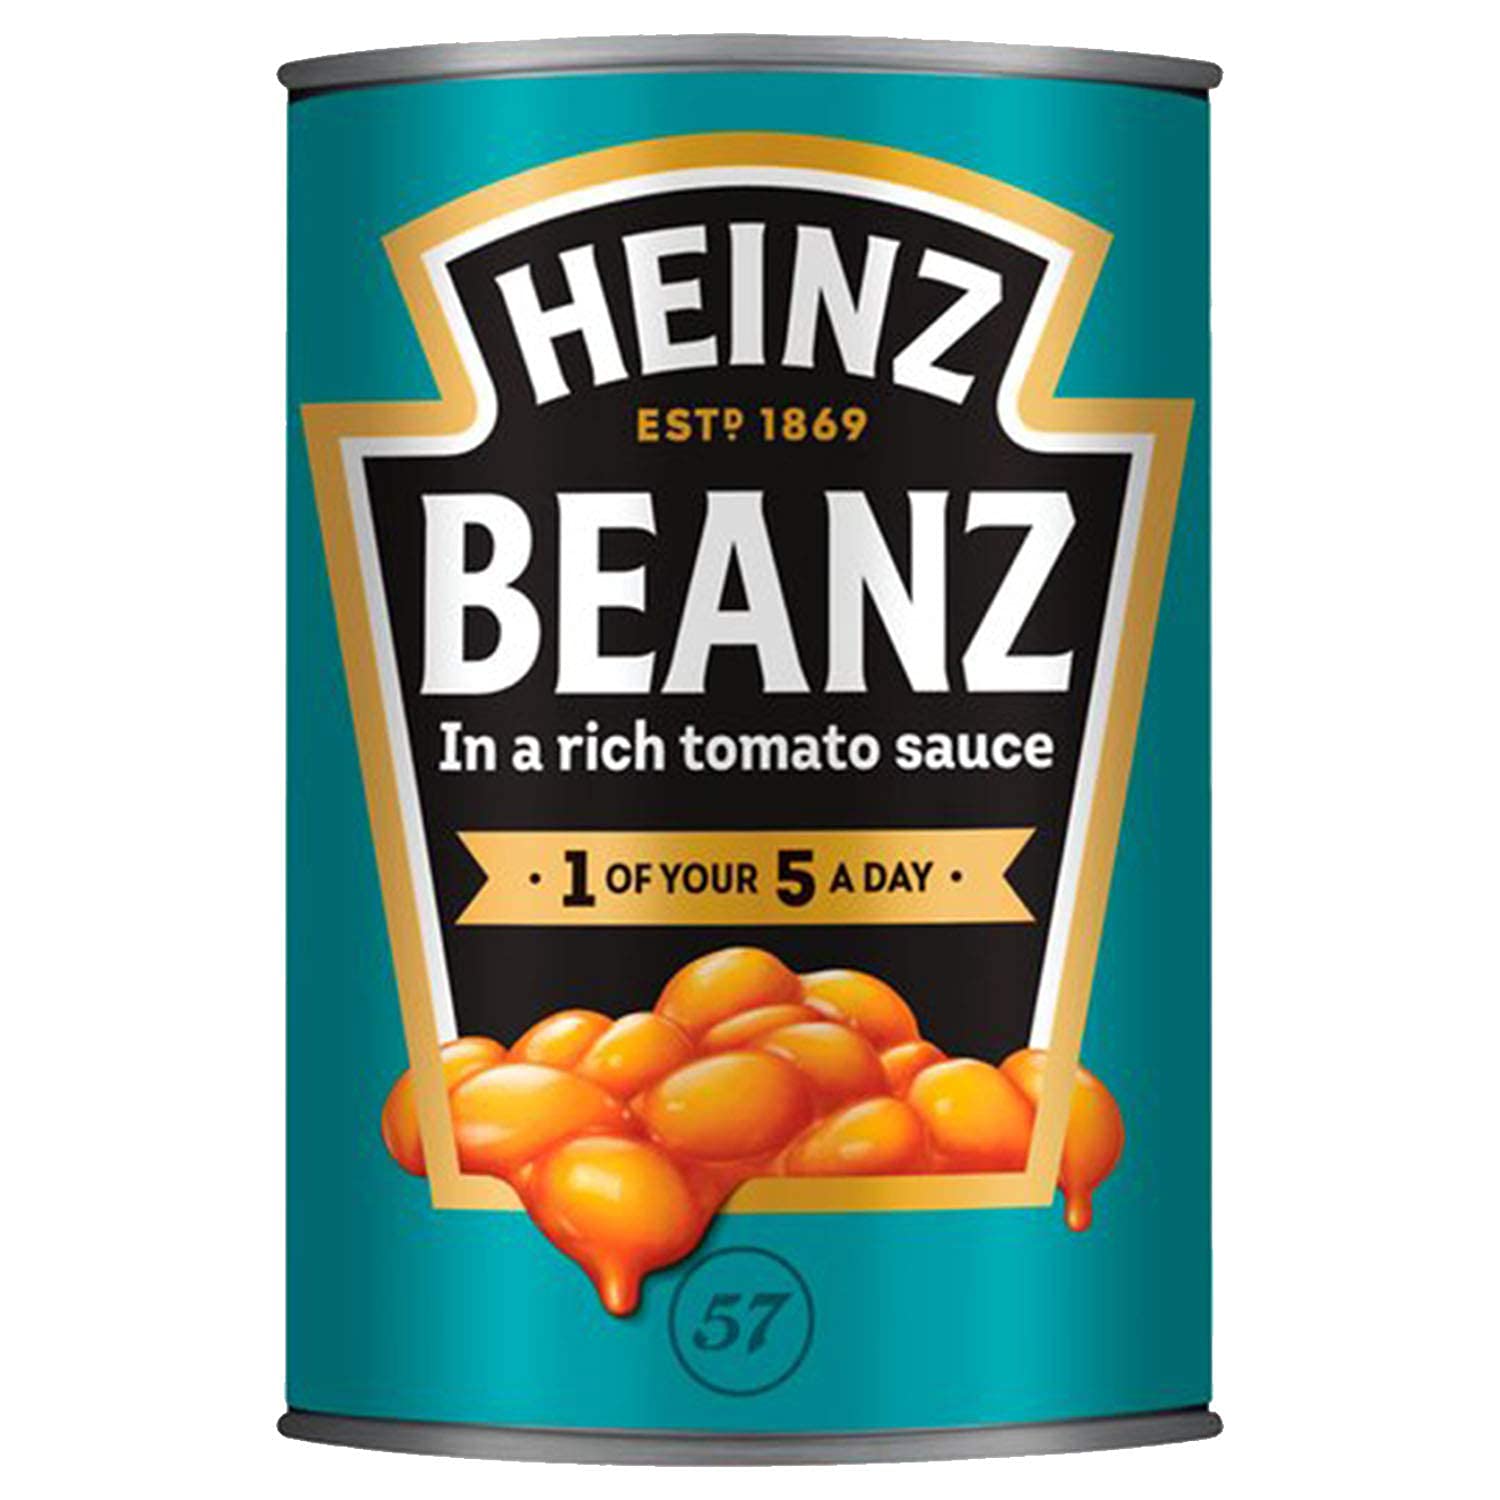 HEINZ Beanz in Tomato Sauce Image